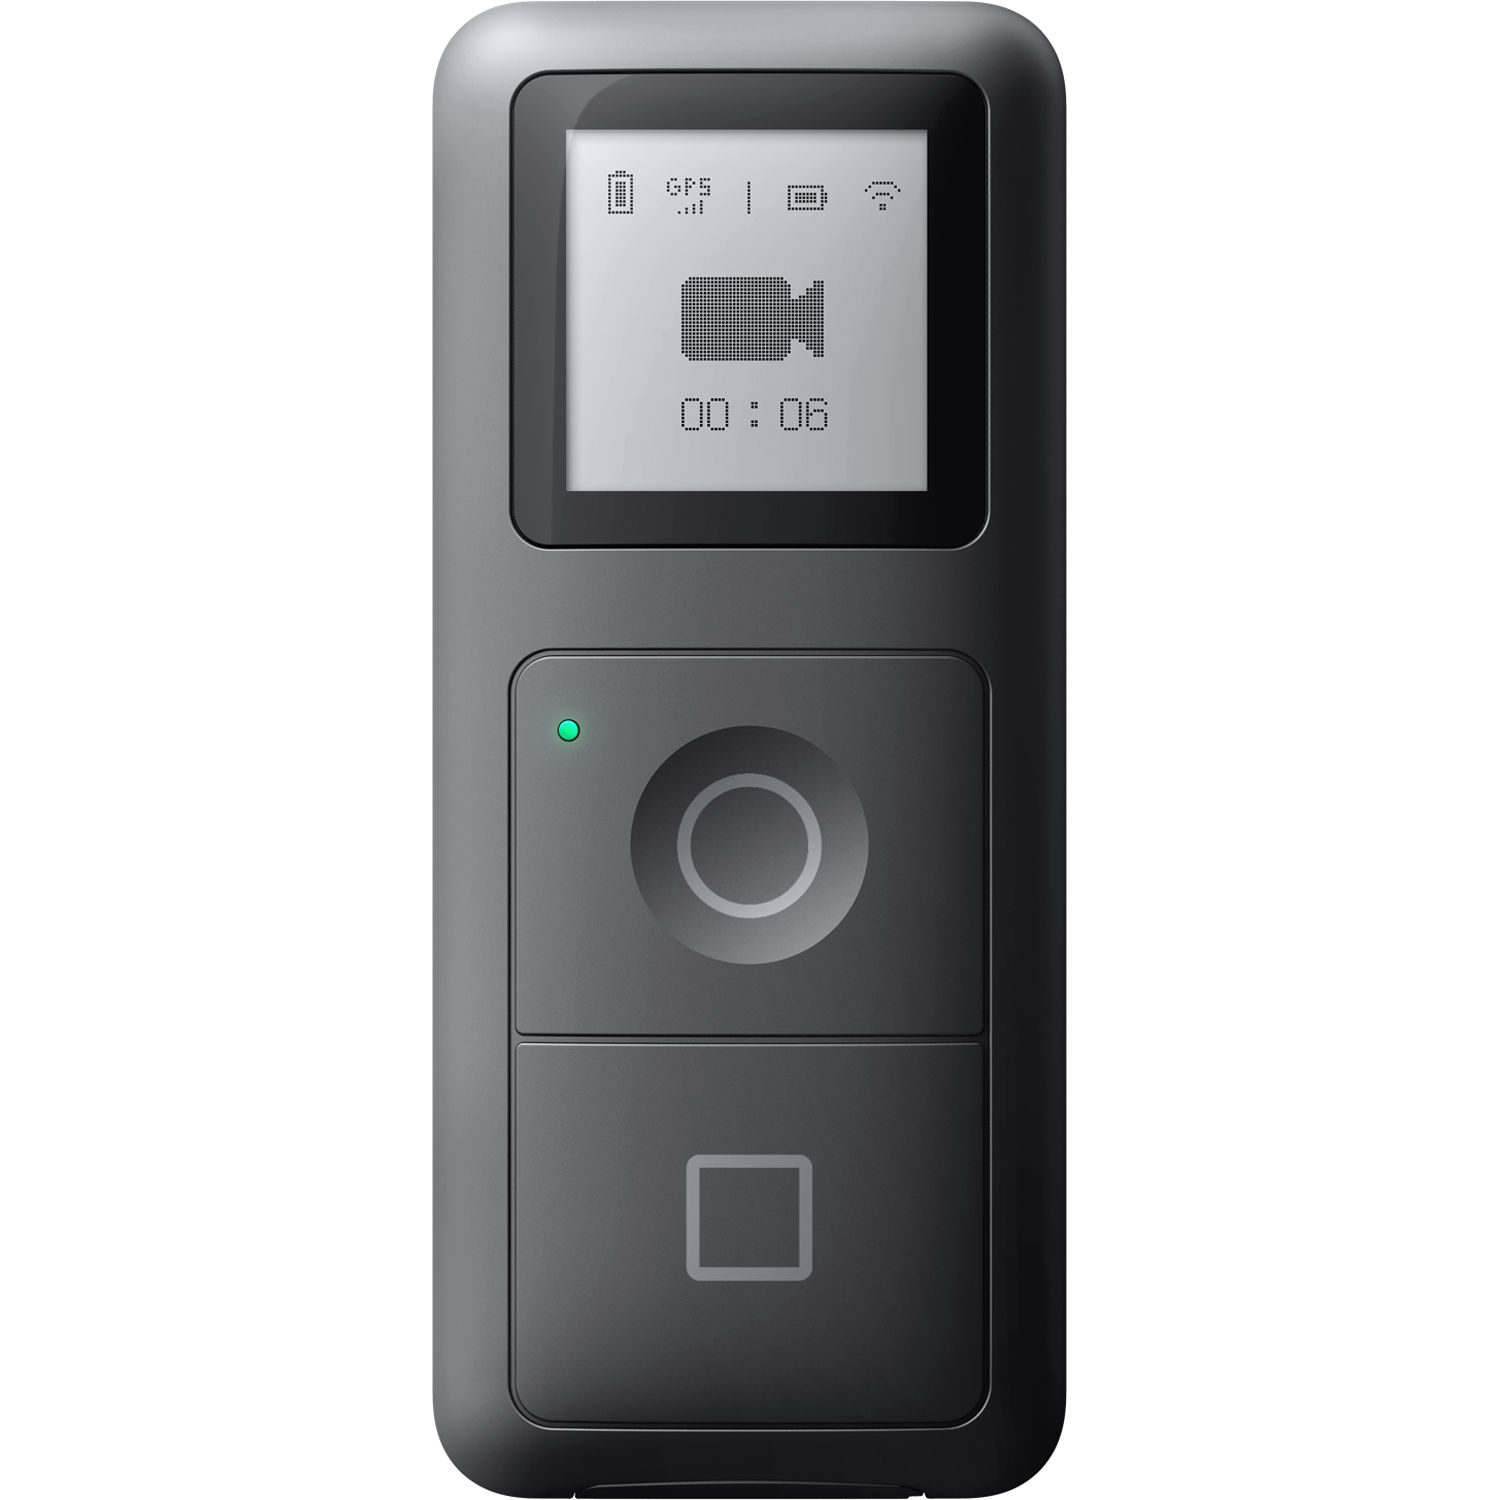 Insta360 Gps Smart Remote For One R And One X Cameras Cinbtct A